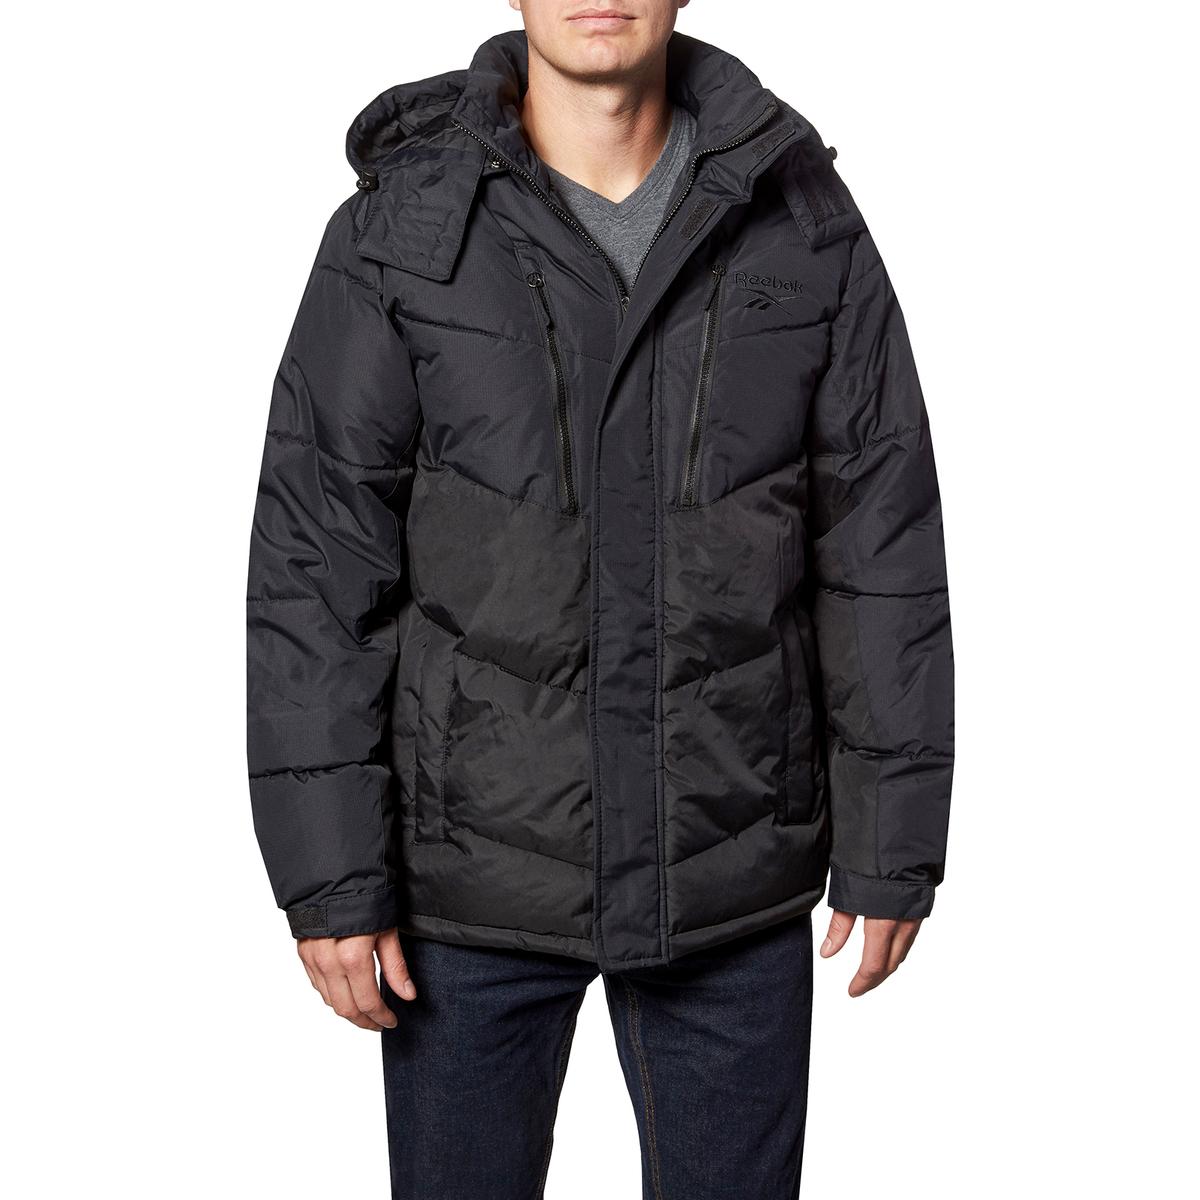 Reebok Heavyweight Puffer Coat for Men- Insulated Hooded Winter Bubble ...